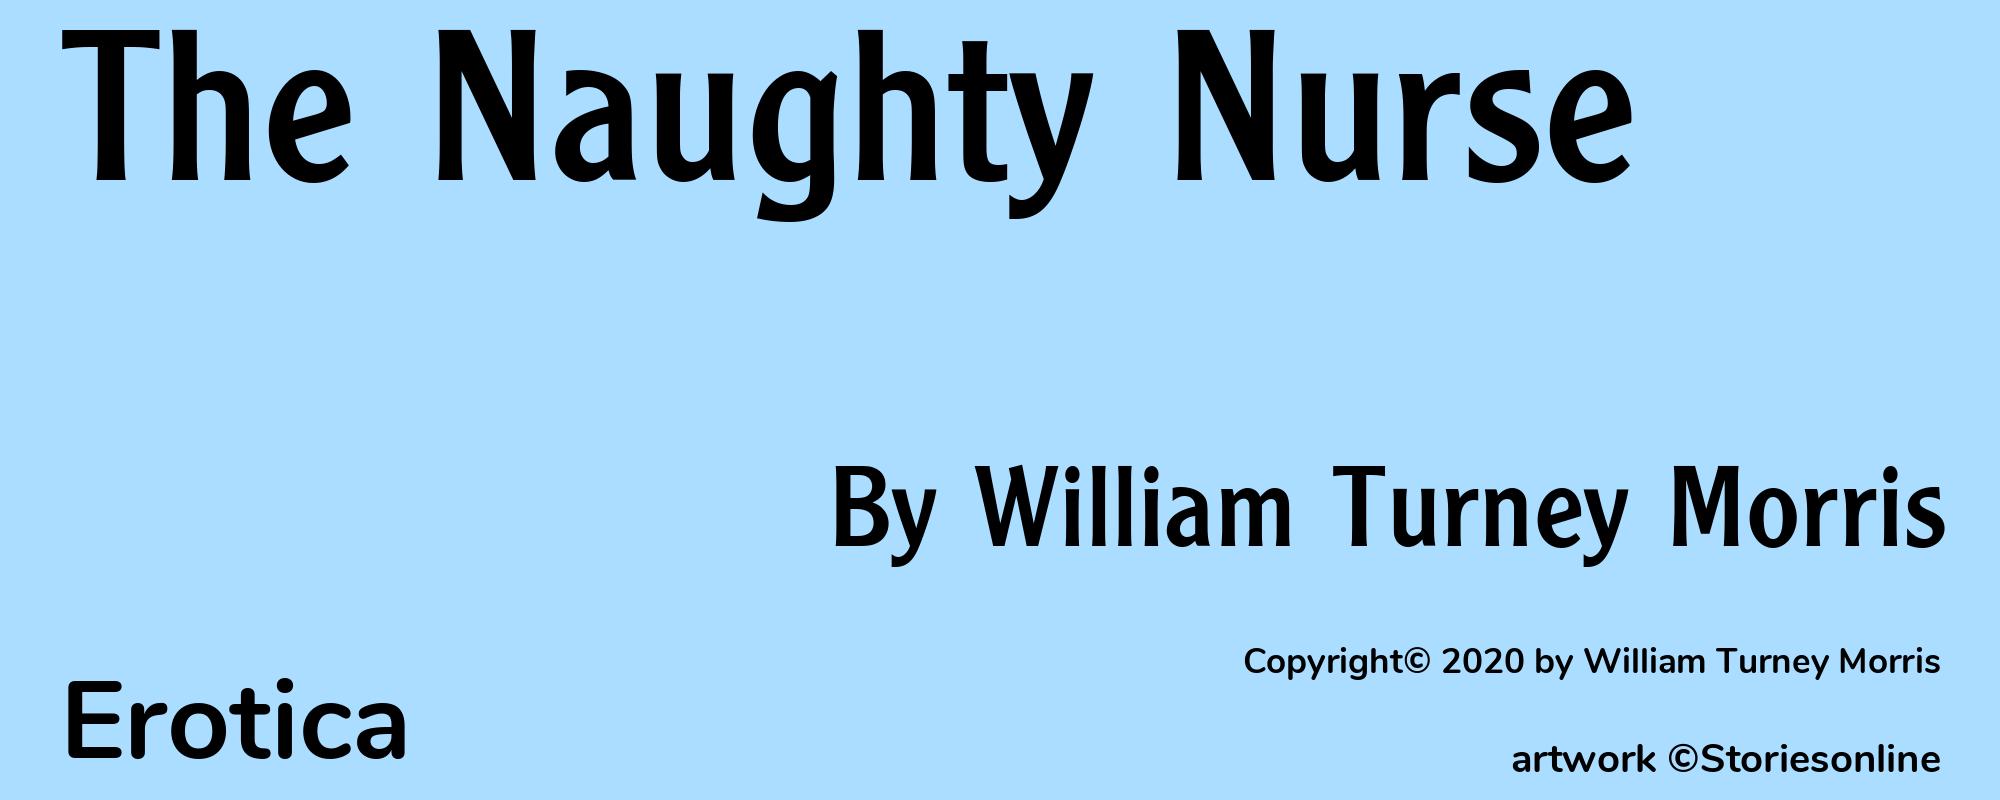 The Naughty Nurse - Cover